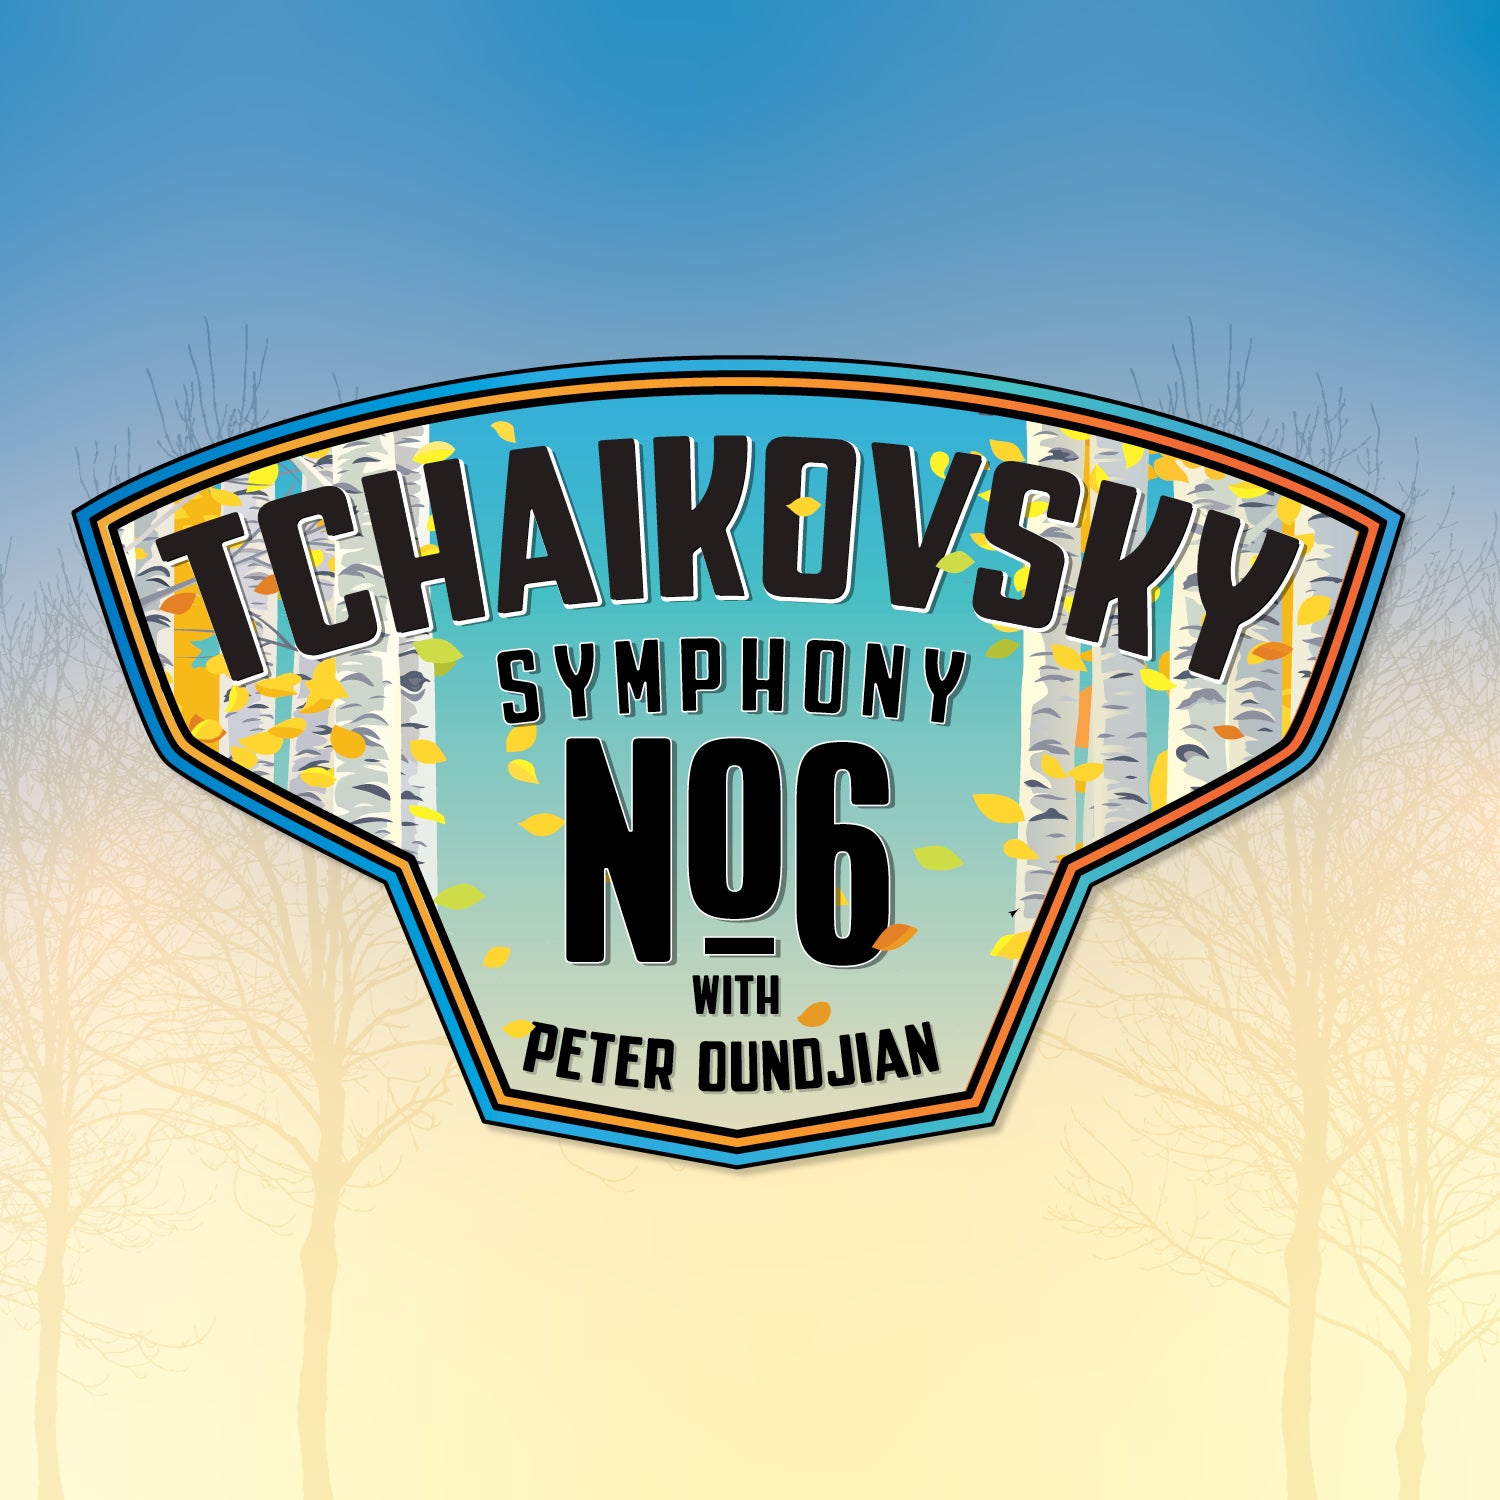 More Info for Tchaikovsky Symphony No. 6 with Peter Oundjian